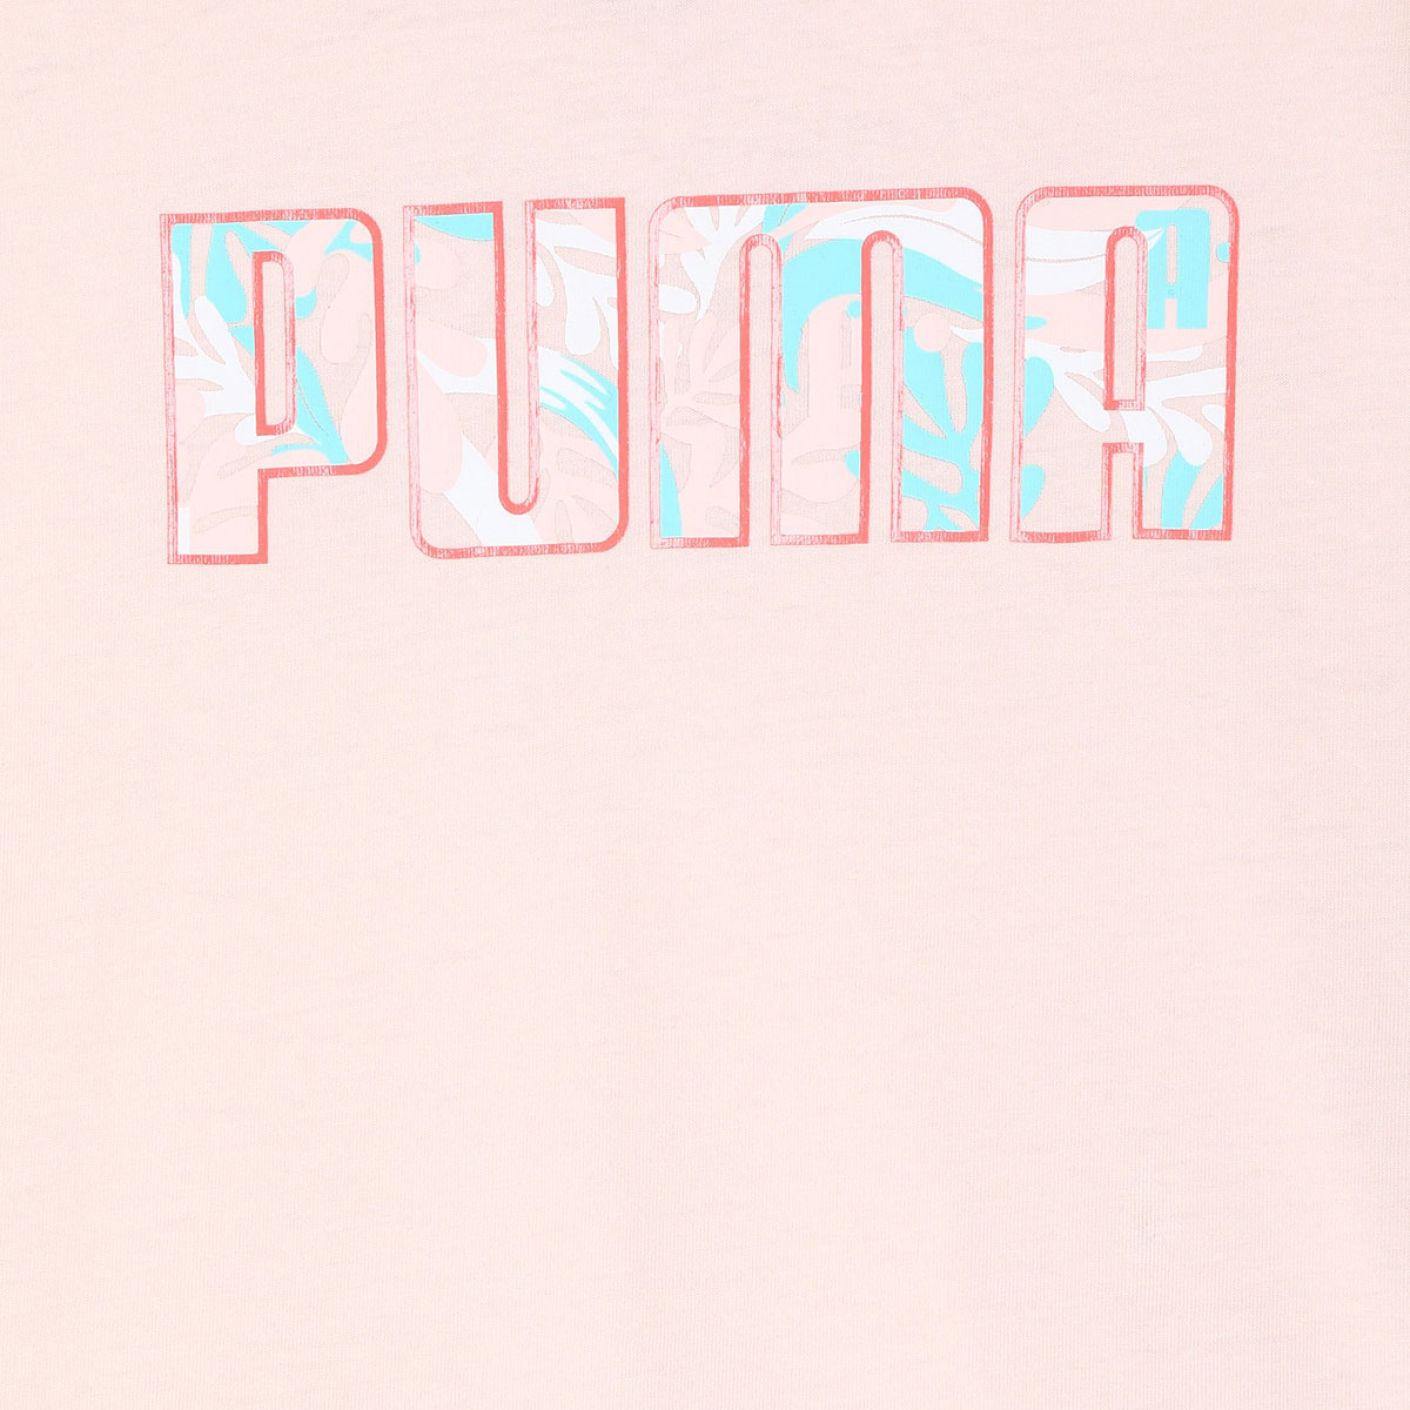 Puma Alpha Tee Tee Cloud Pink for Girls